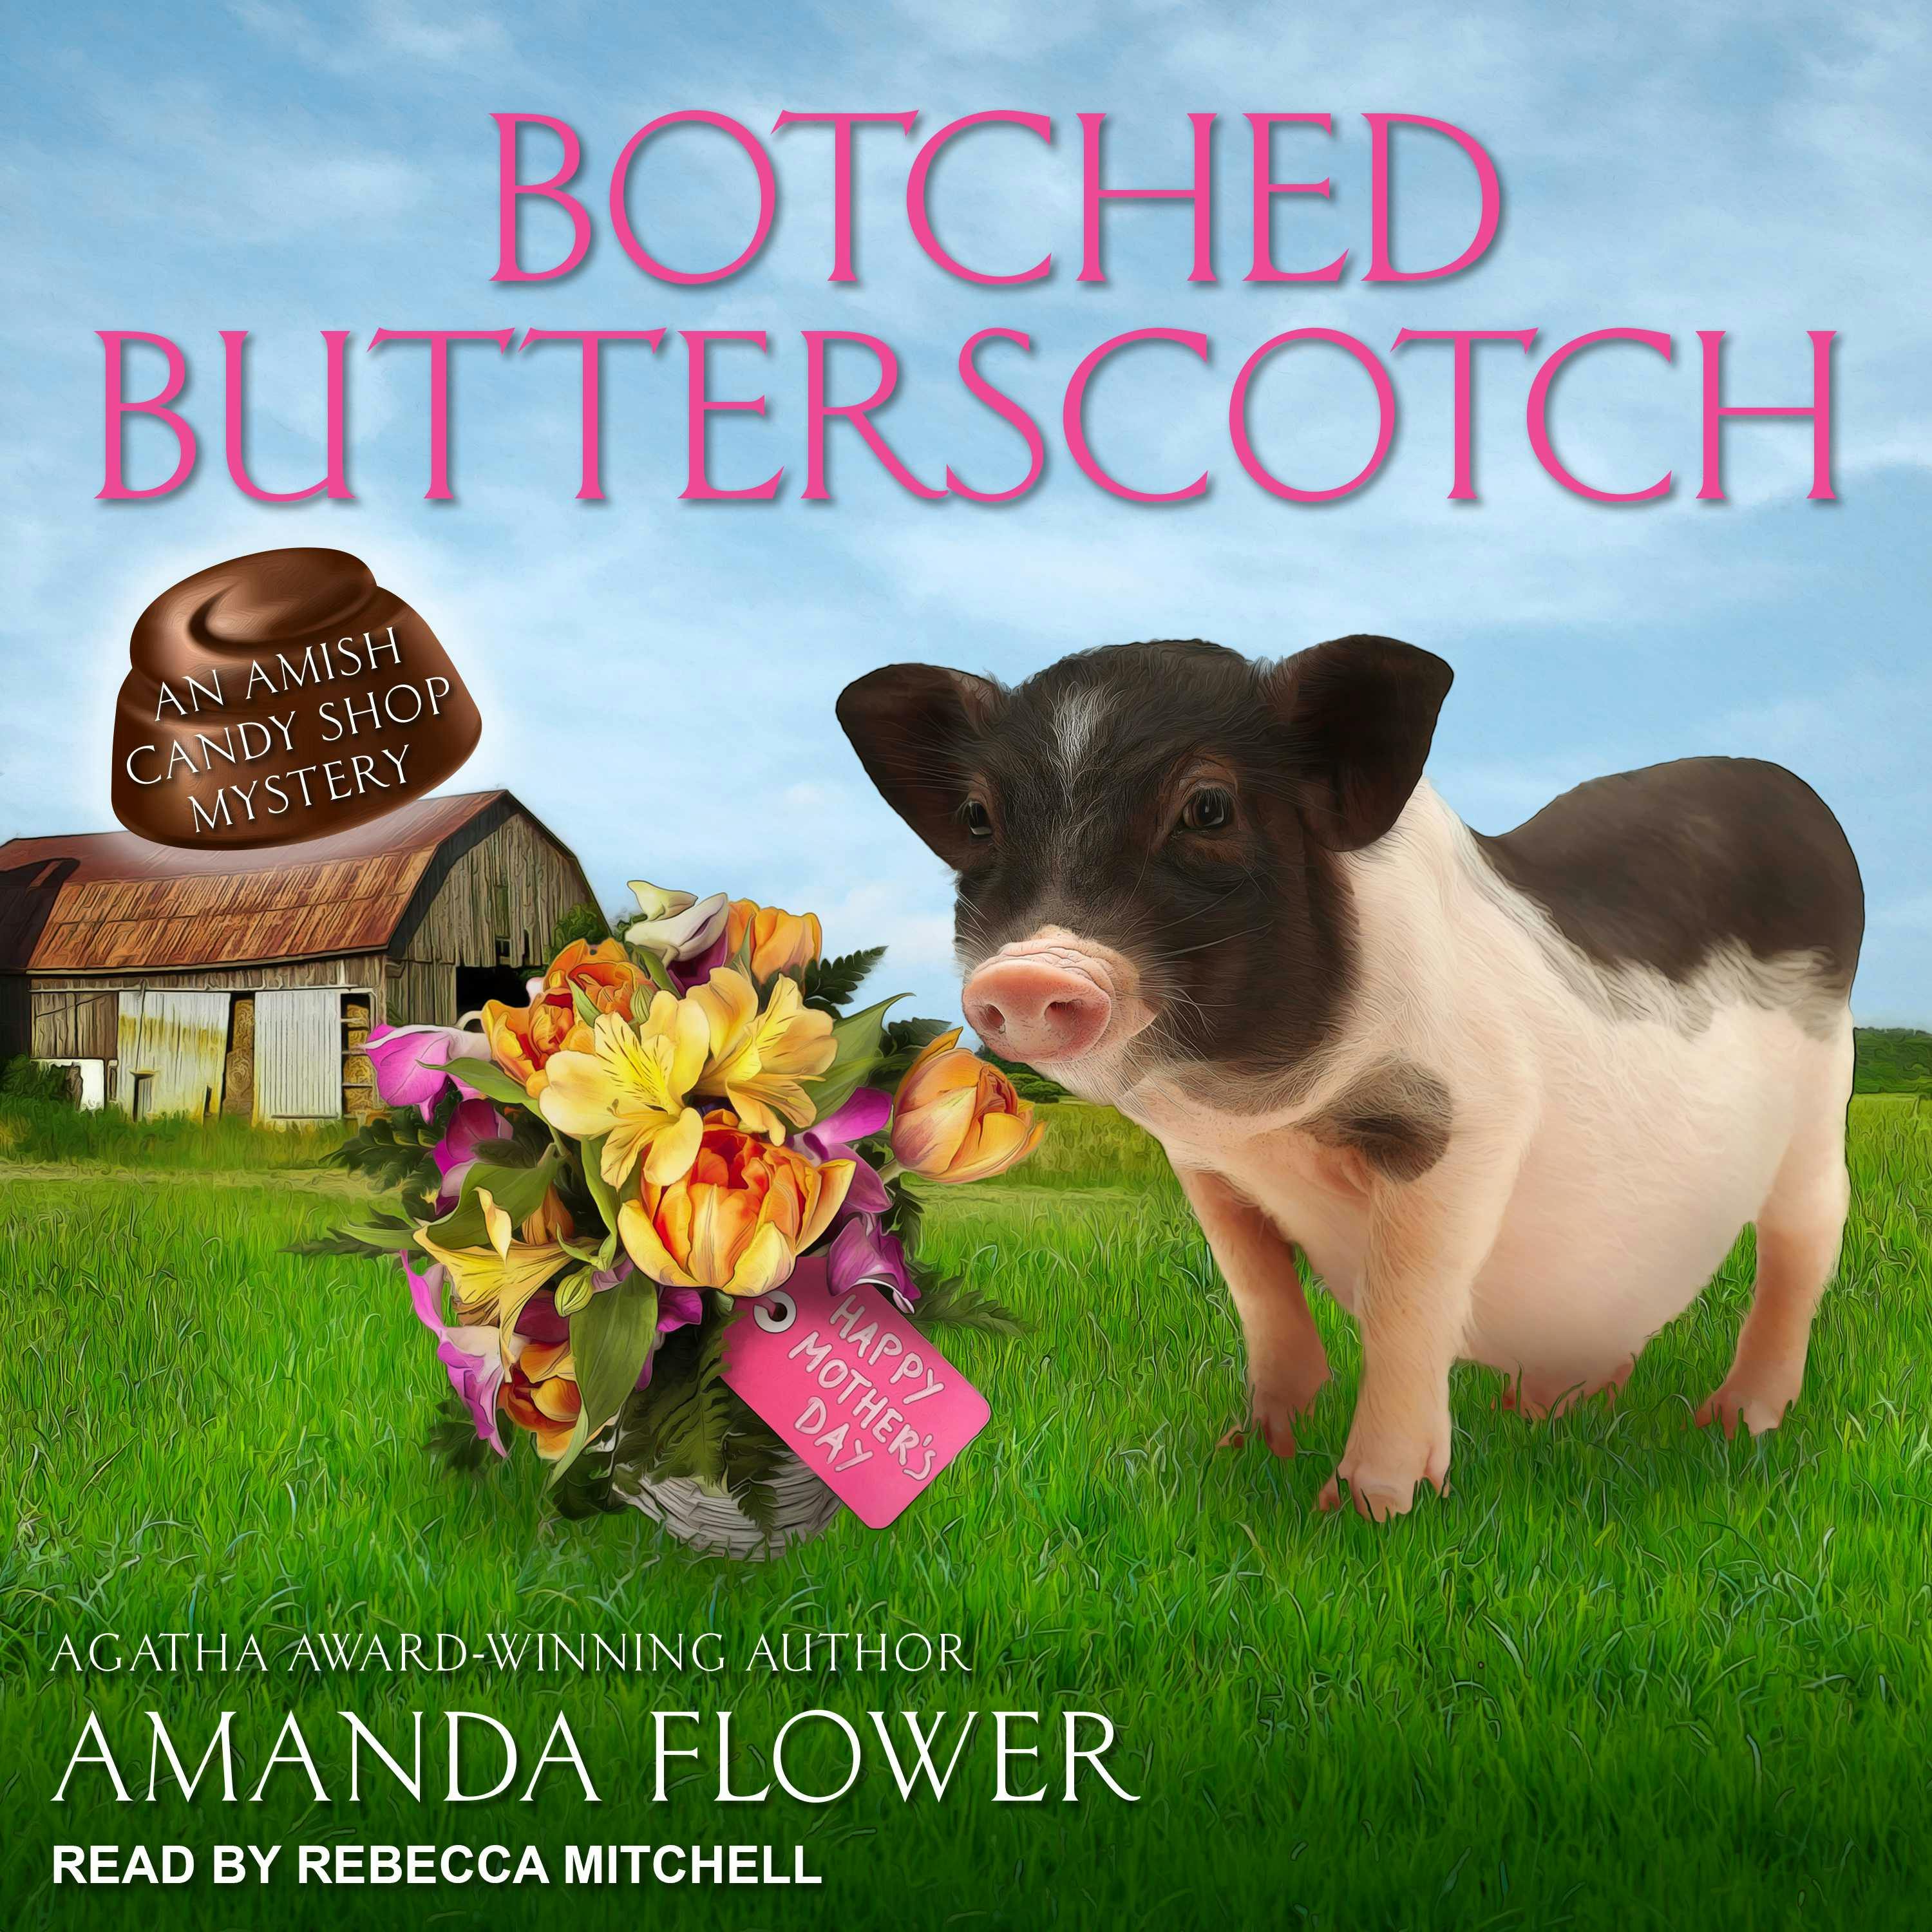 Botched Butterscotch: An Amish Candy Shop Mystery - Amanda Flower